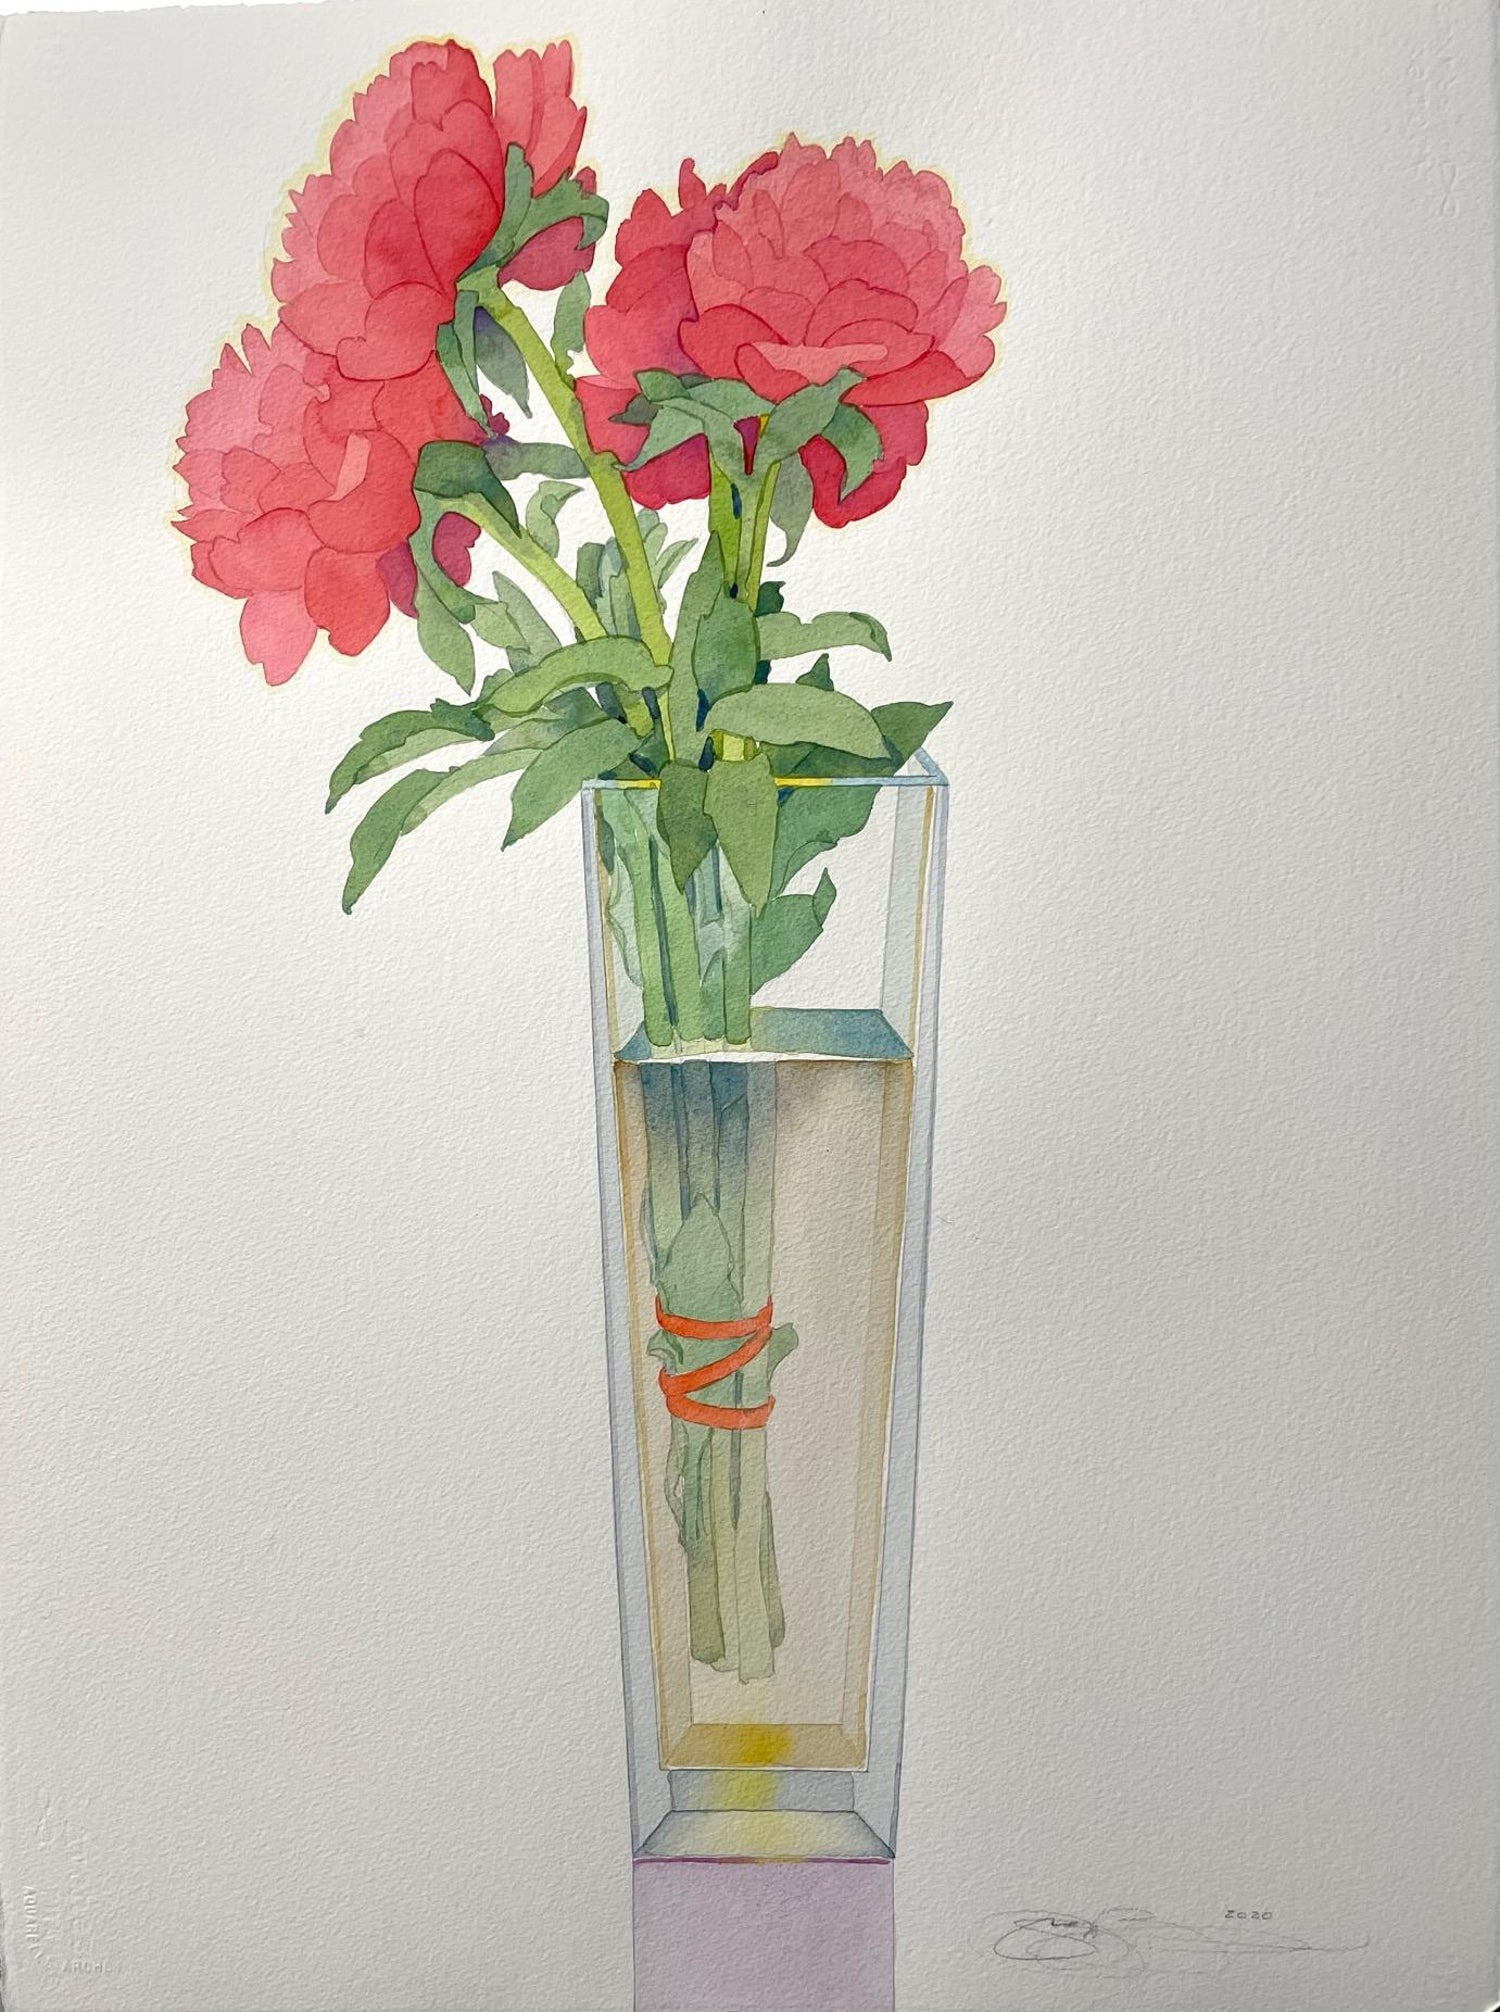 Gary Bukovnik - Glowing Peonies in Tall Vase For Sale at 1stDibs